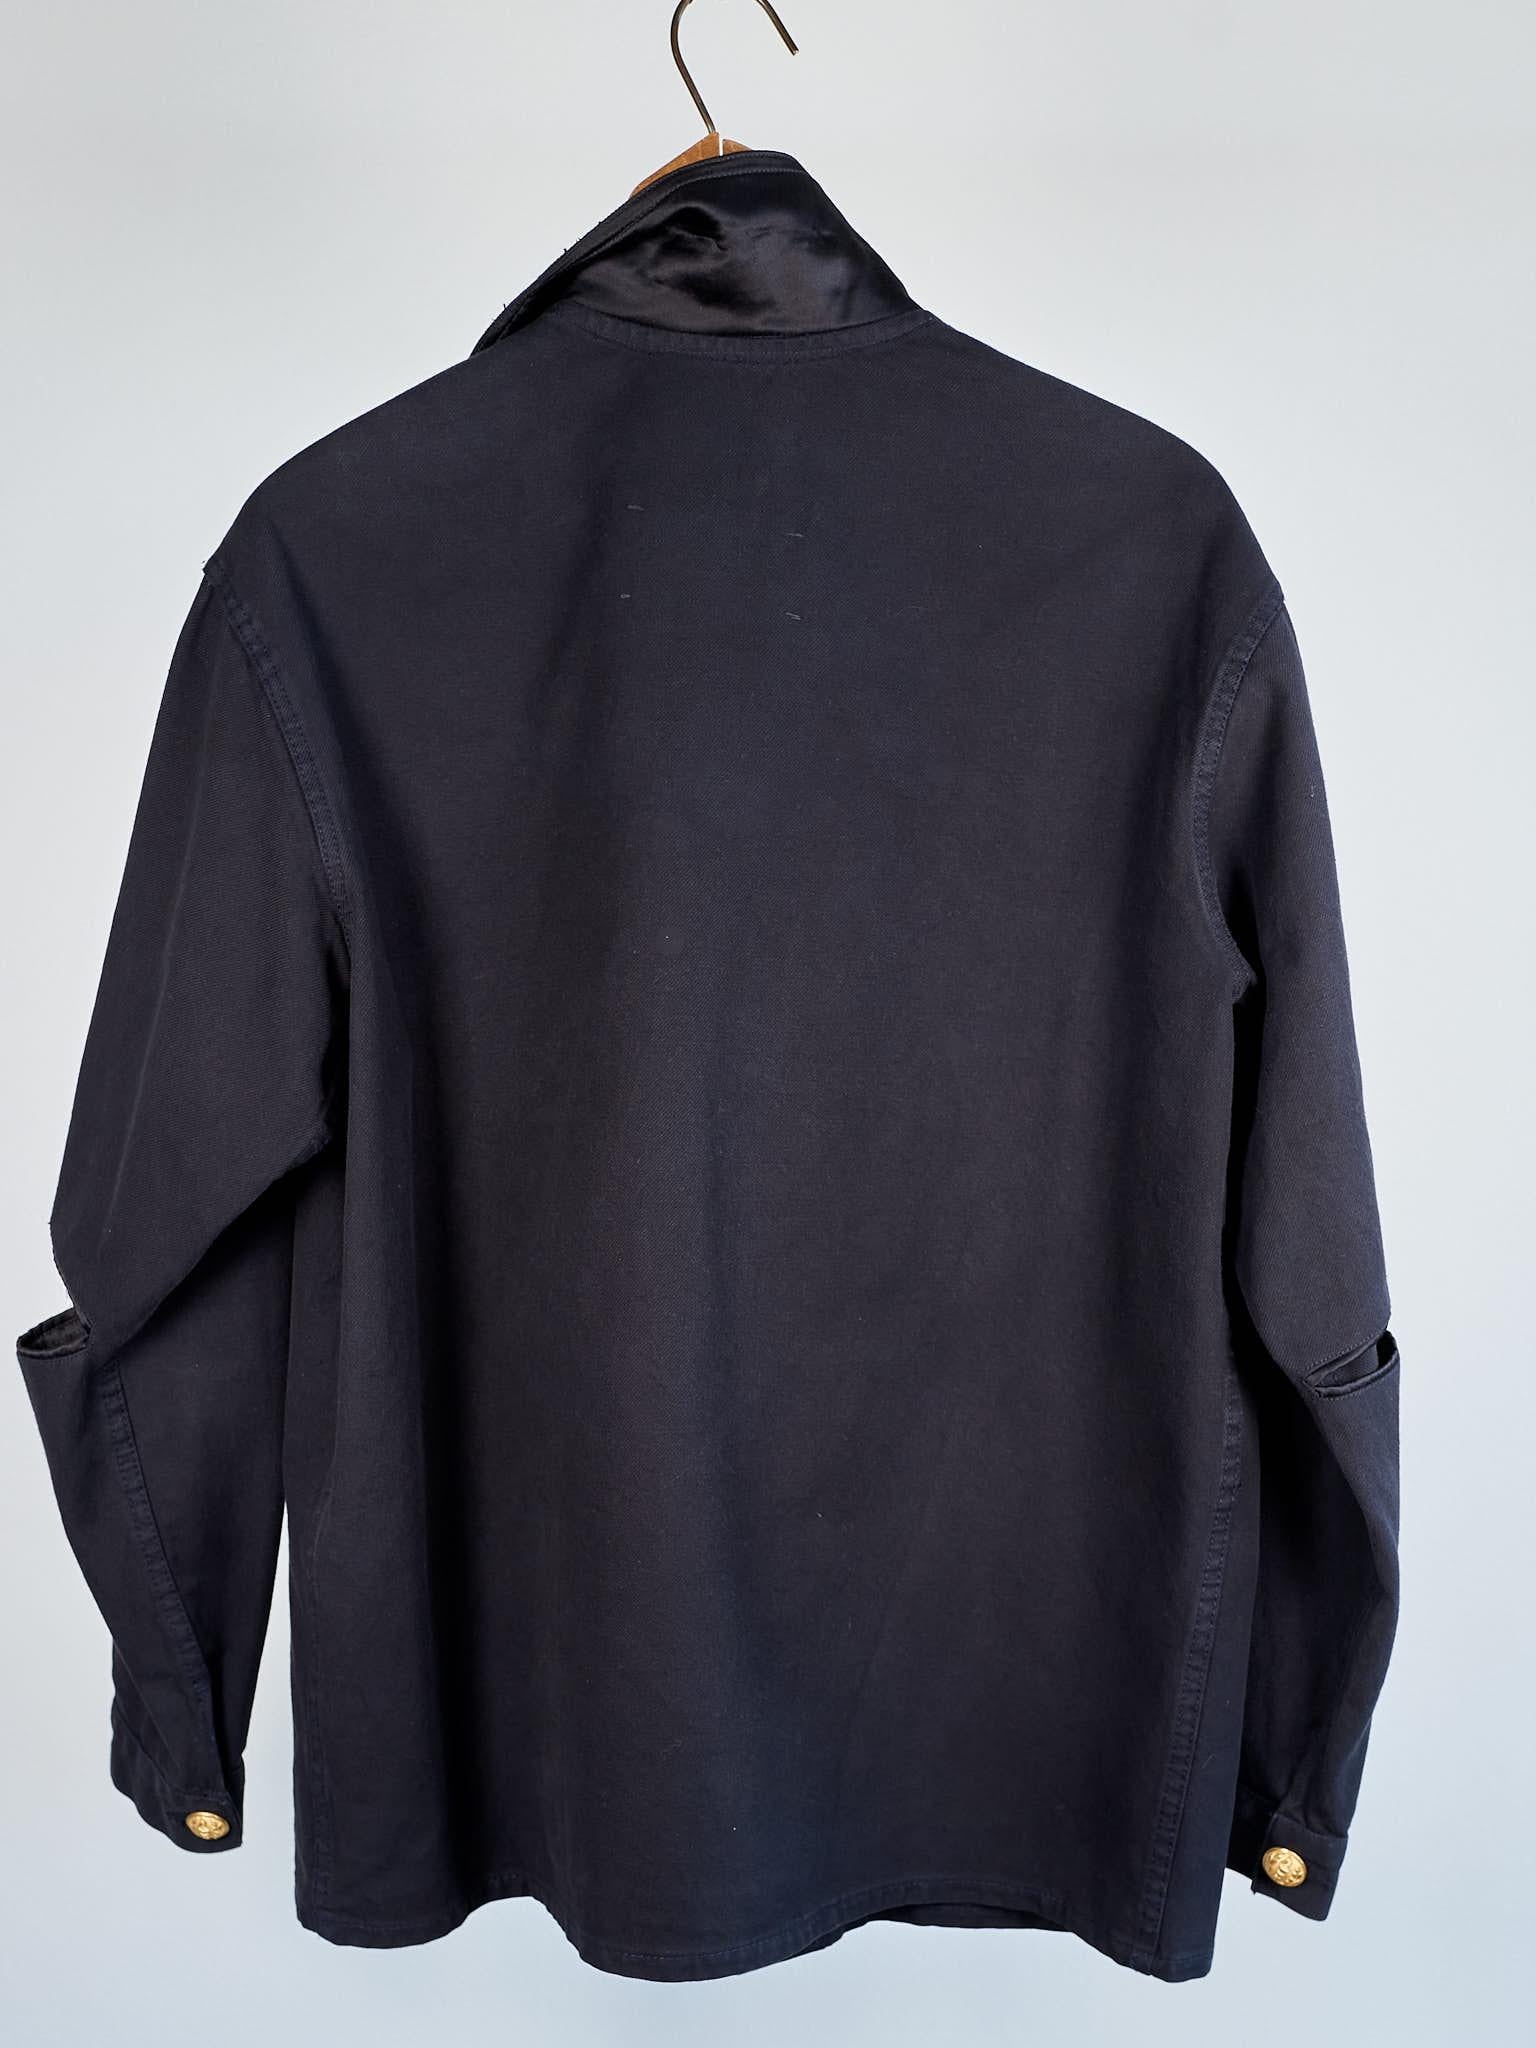 Vintage One of a kind Jacket Black French Silver Black Lurex Tweed J Dauphin 4